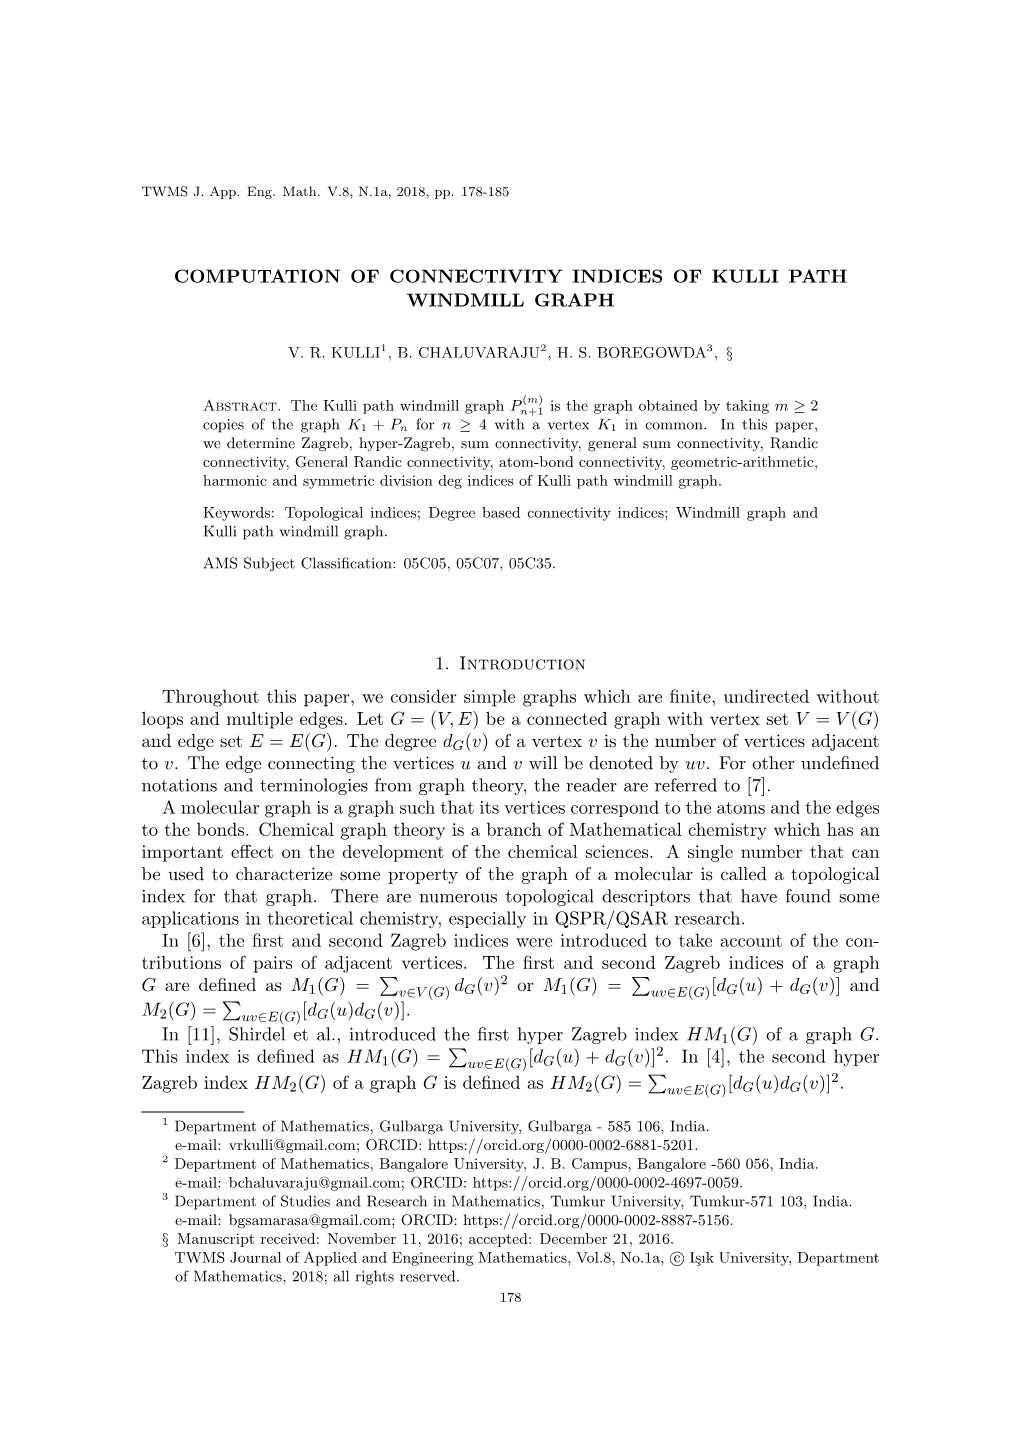 Computation of Connectivity Indices of Kulli Path Windmill Graph